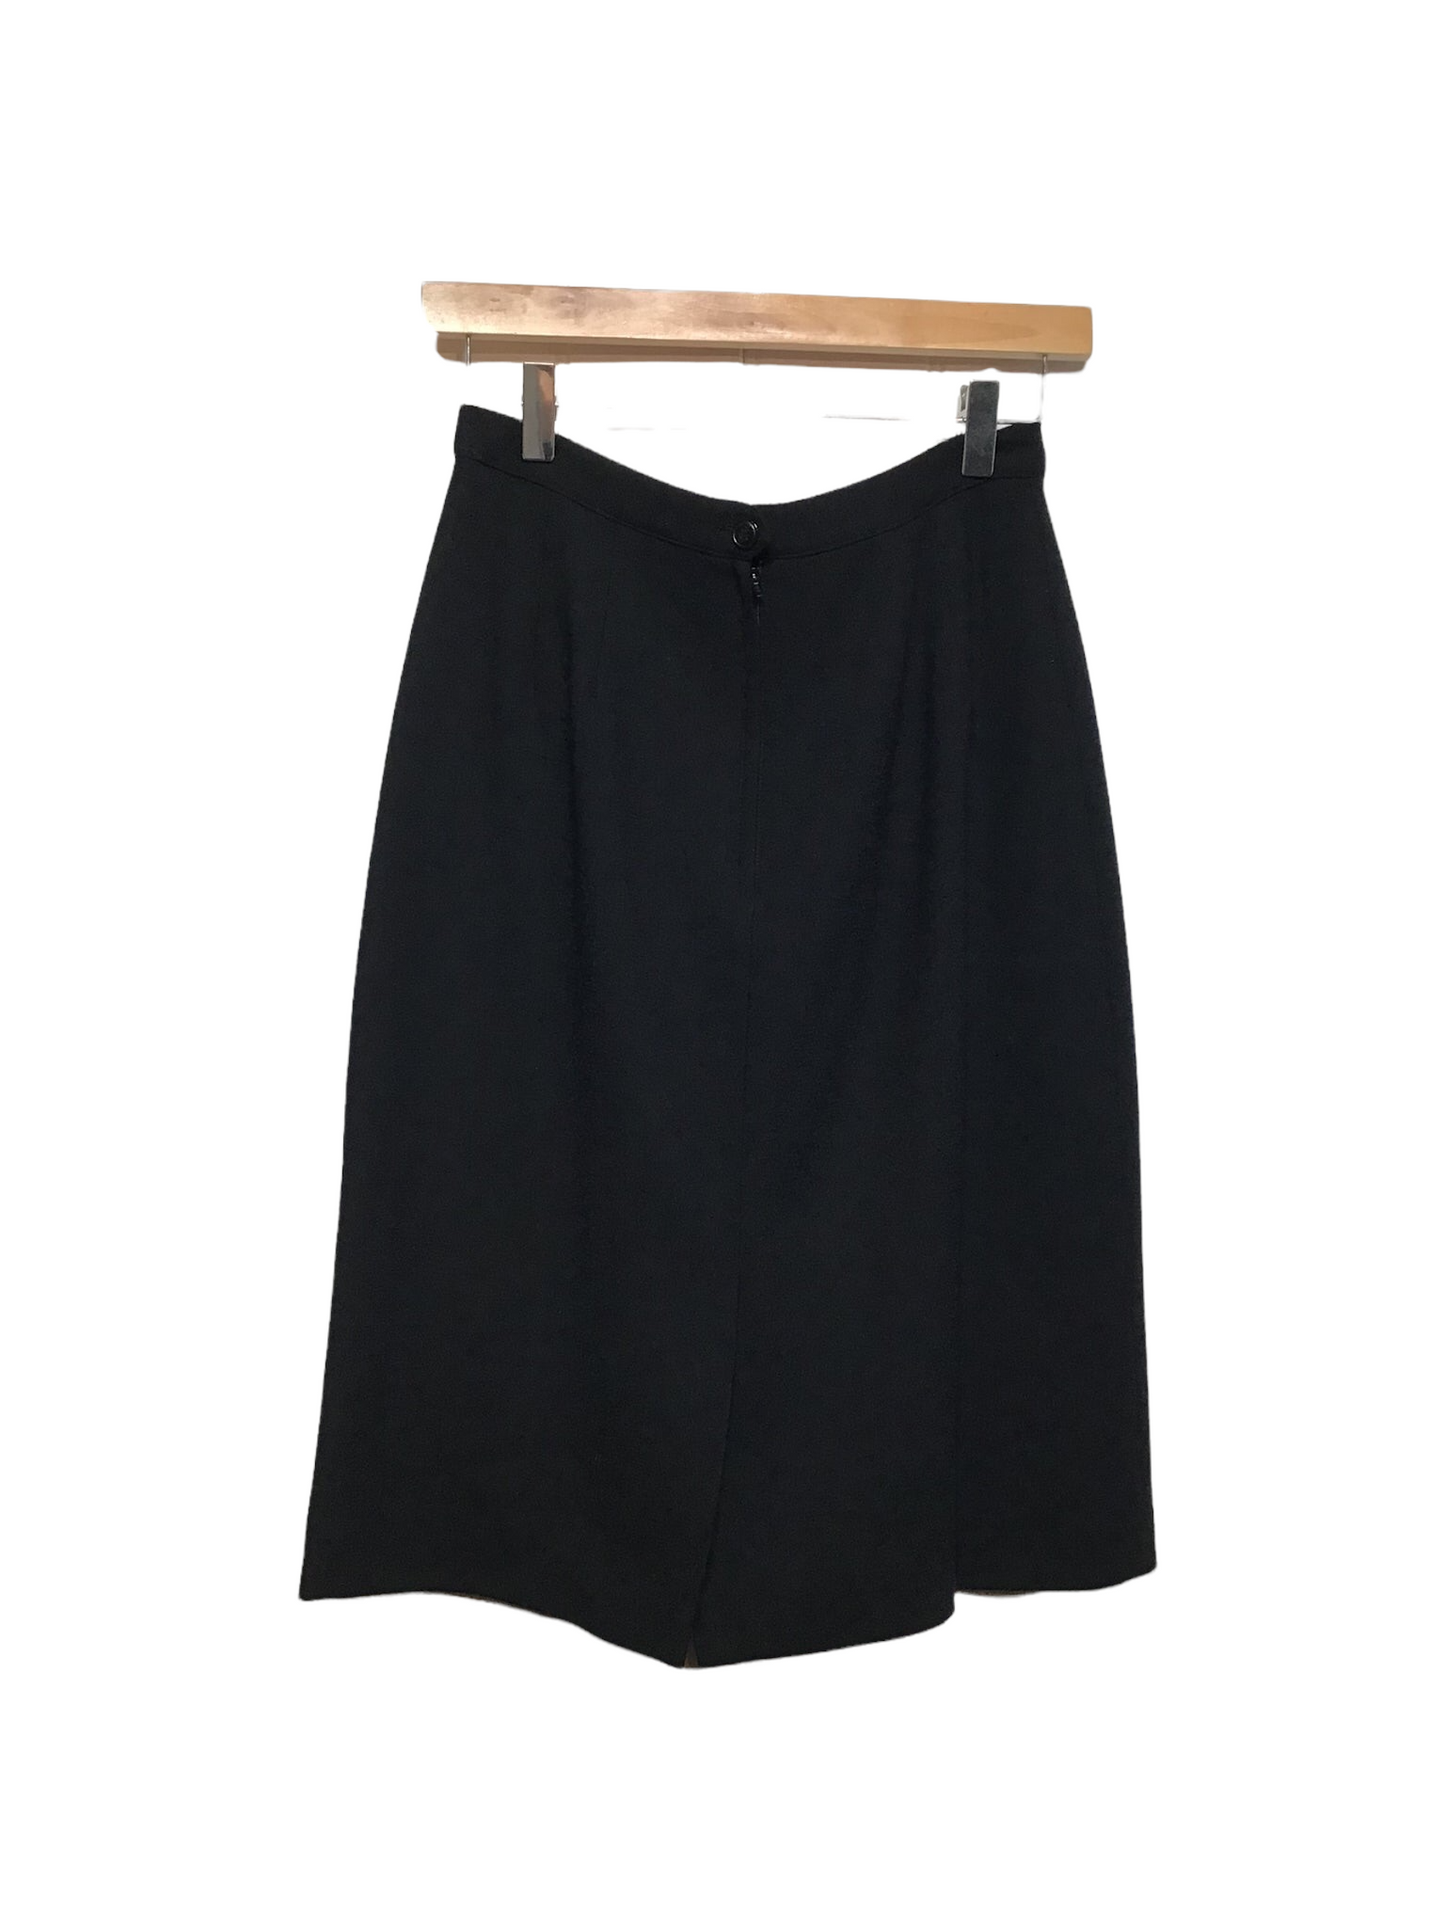 Black Wool Midi skirt (Size S)